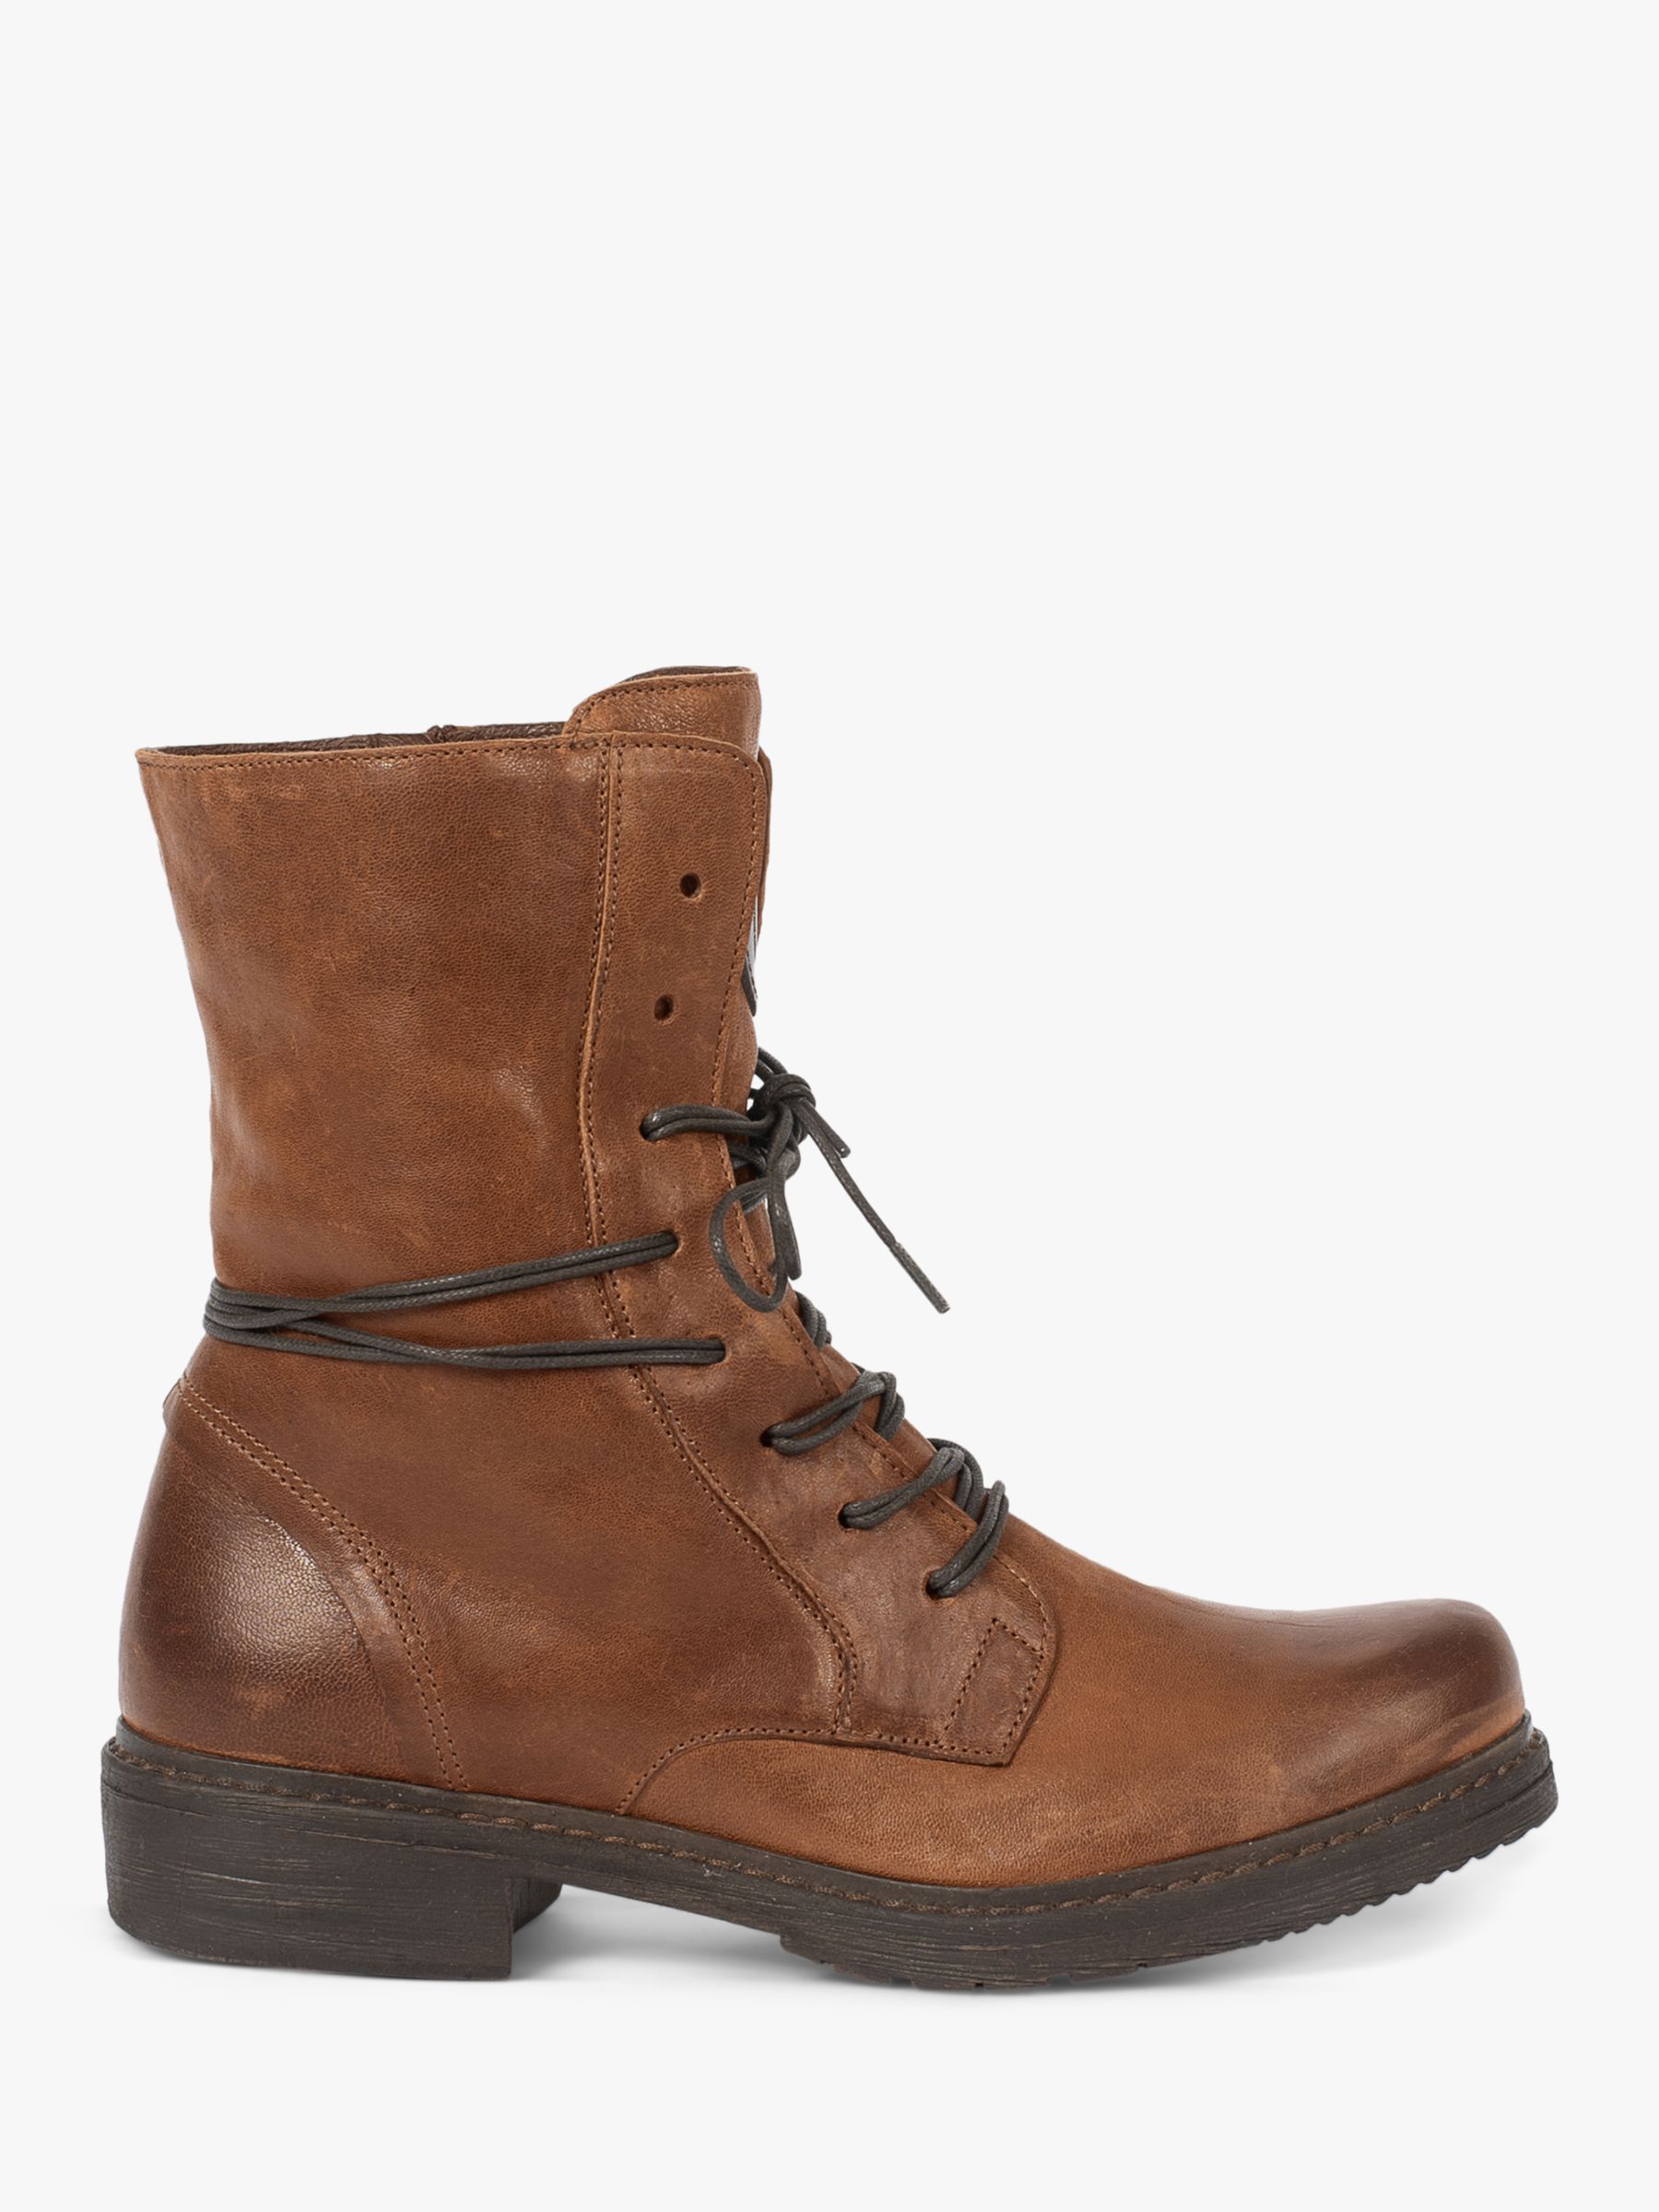 Celtic & Co. Leather Derby Boots, Antique Brown, 3